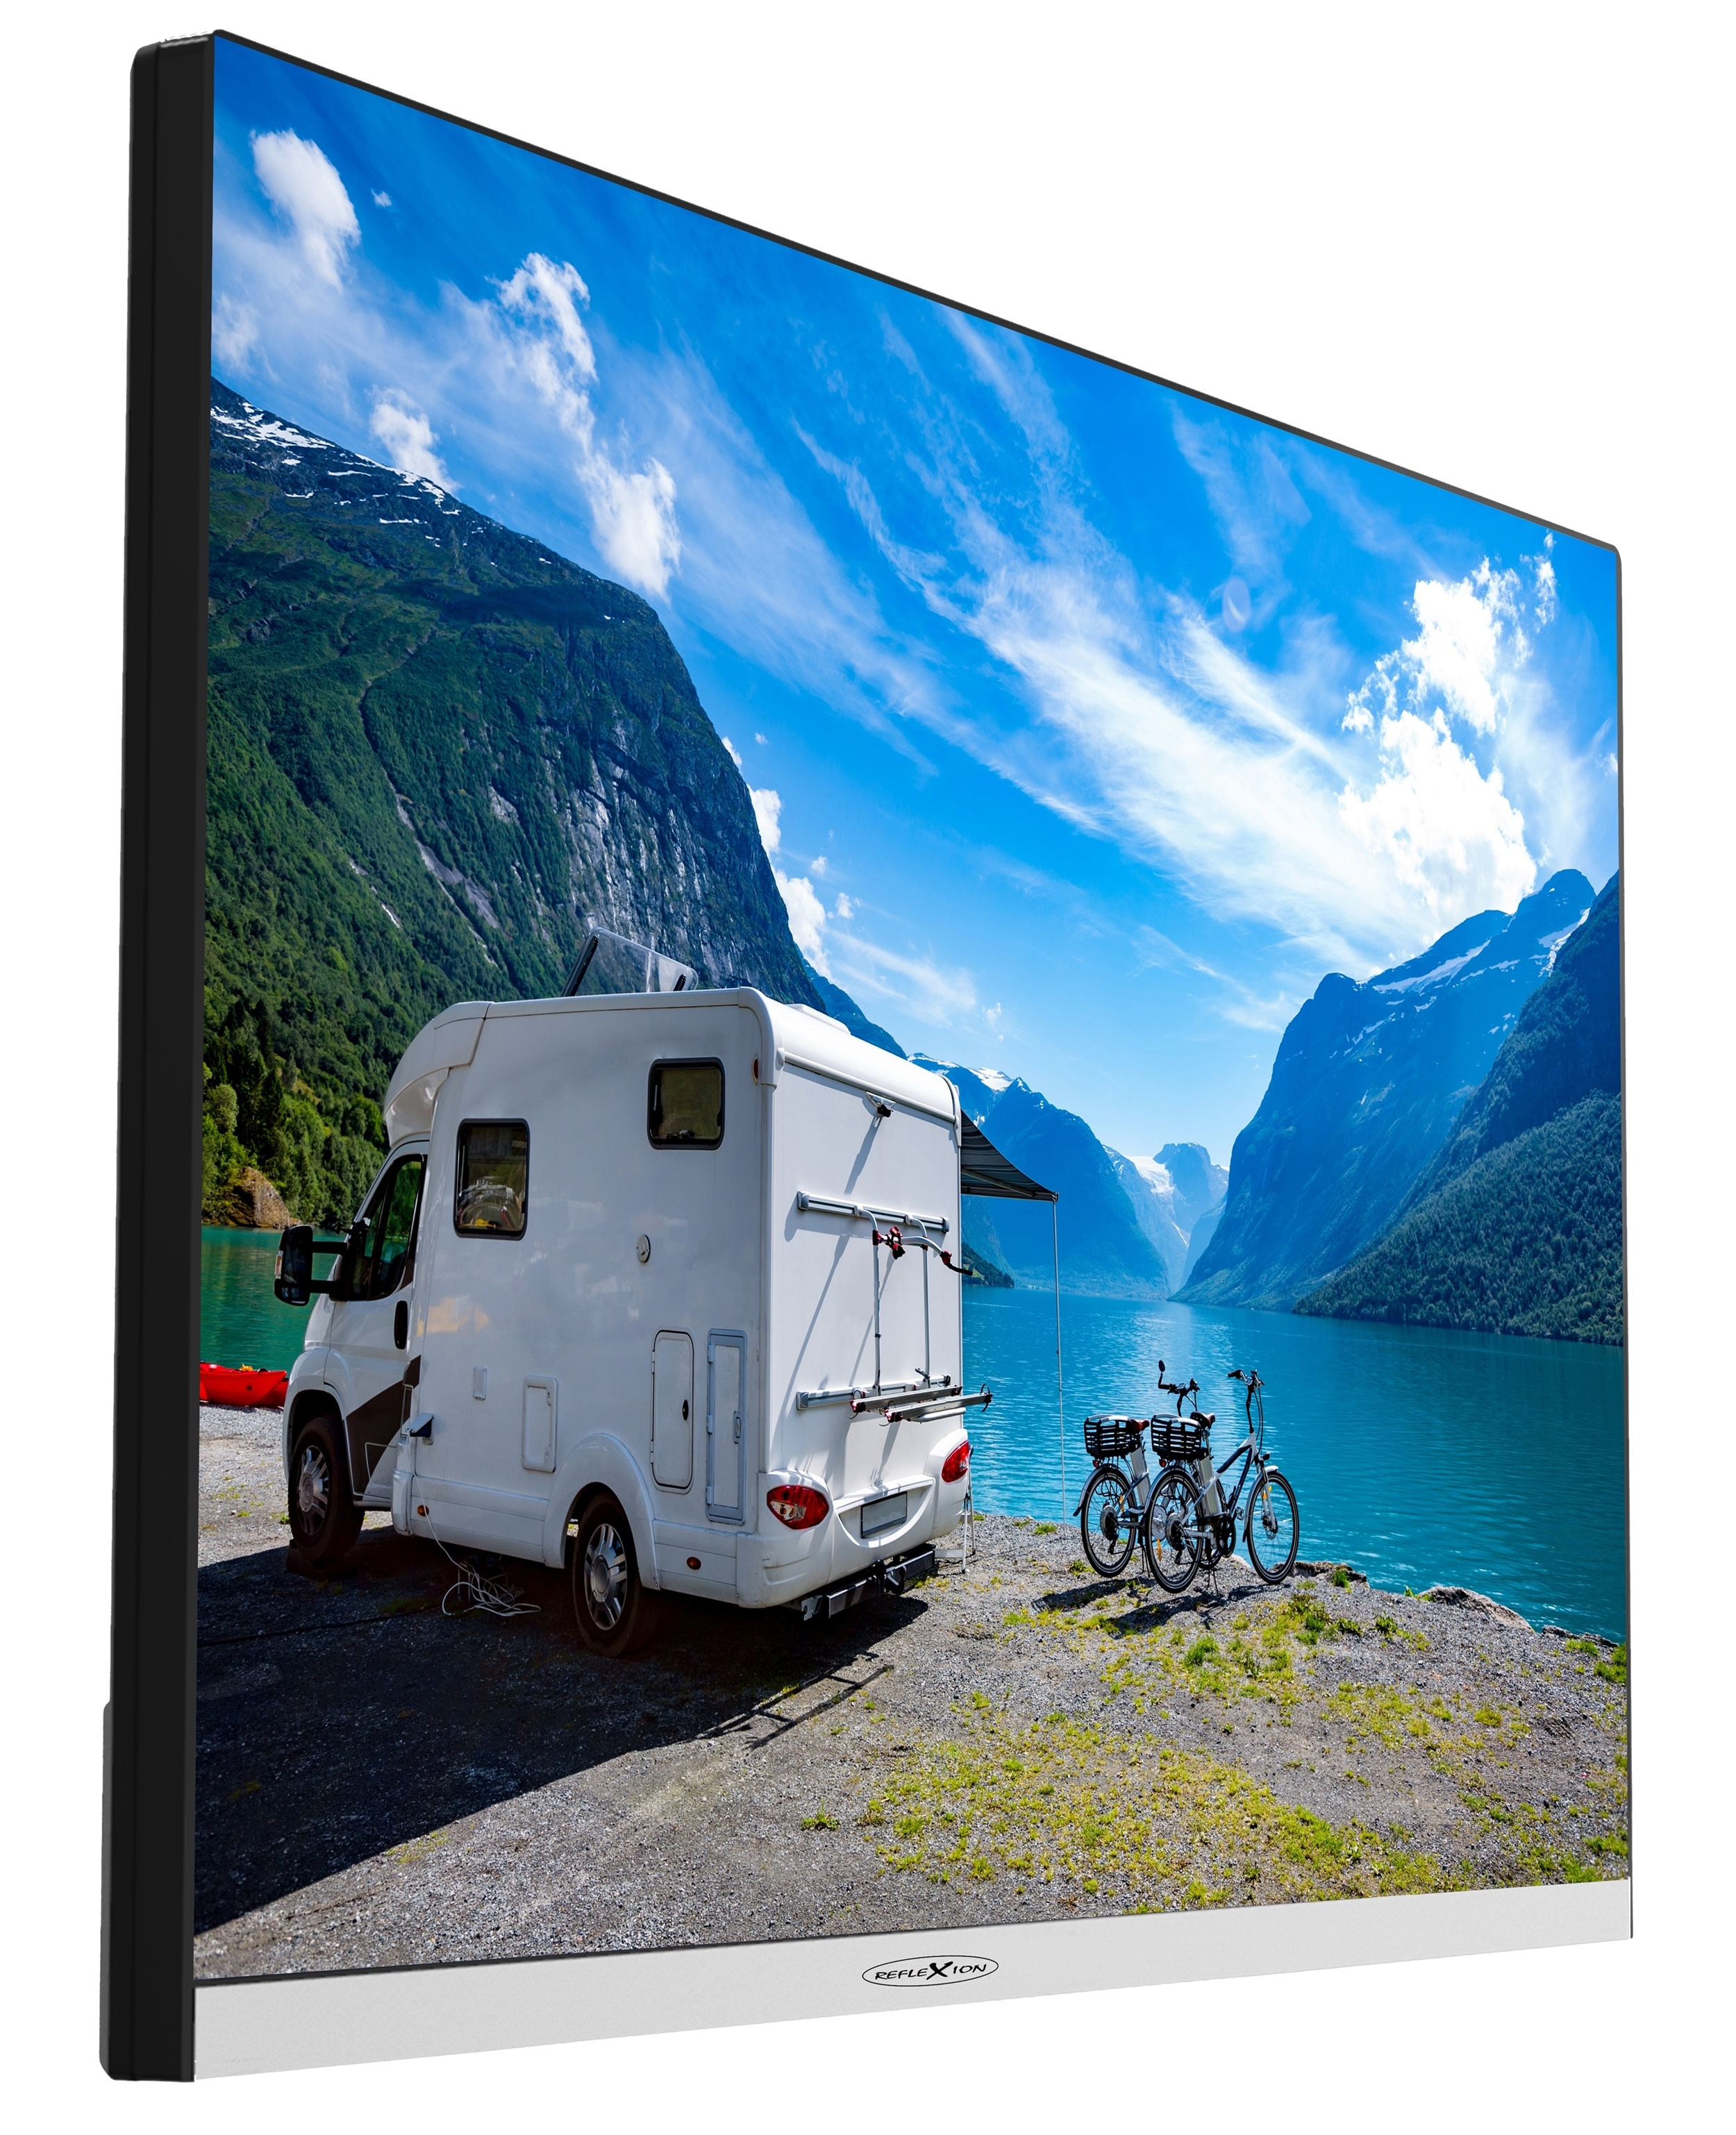 60 SMART LEDX22i+ 24 TV / (Flat, LED TV) Zoll cm, Full-HD, REFLEXION